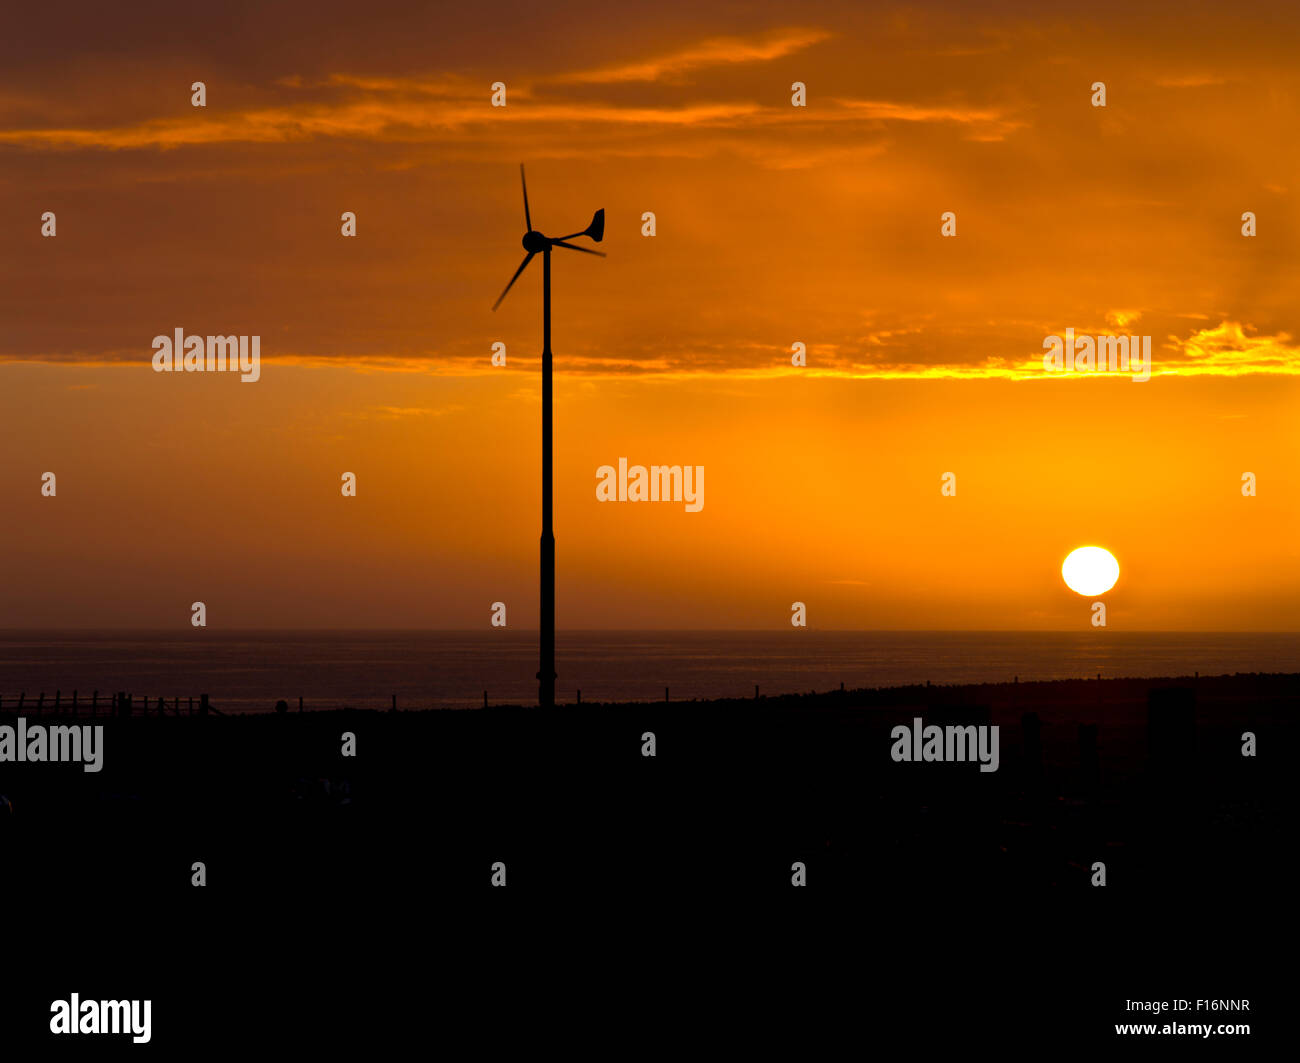 dh TURBINA EOLICA UK Sunset turbina eolica silhouette turbina eolica uk cielo sole set Foto Stock